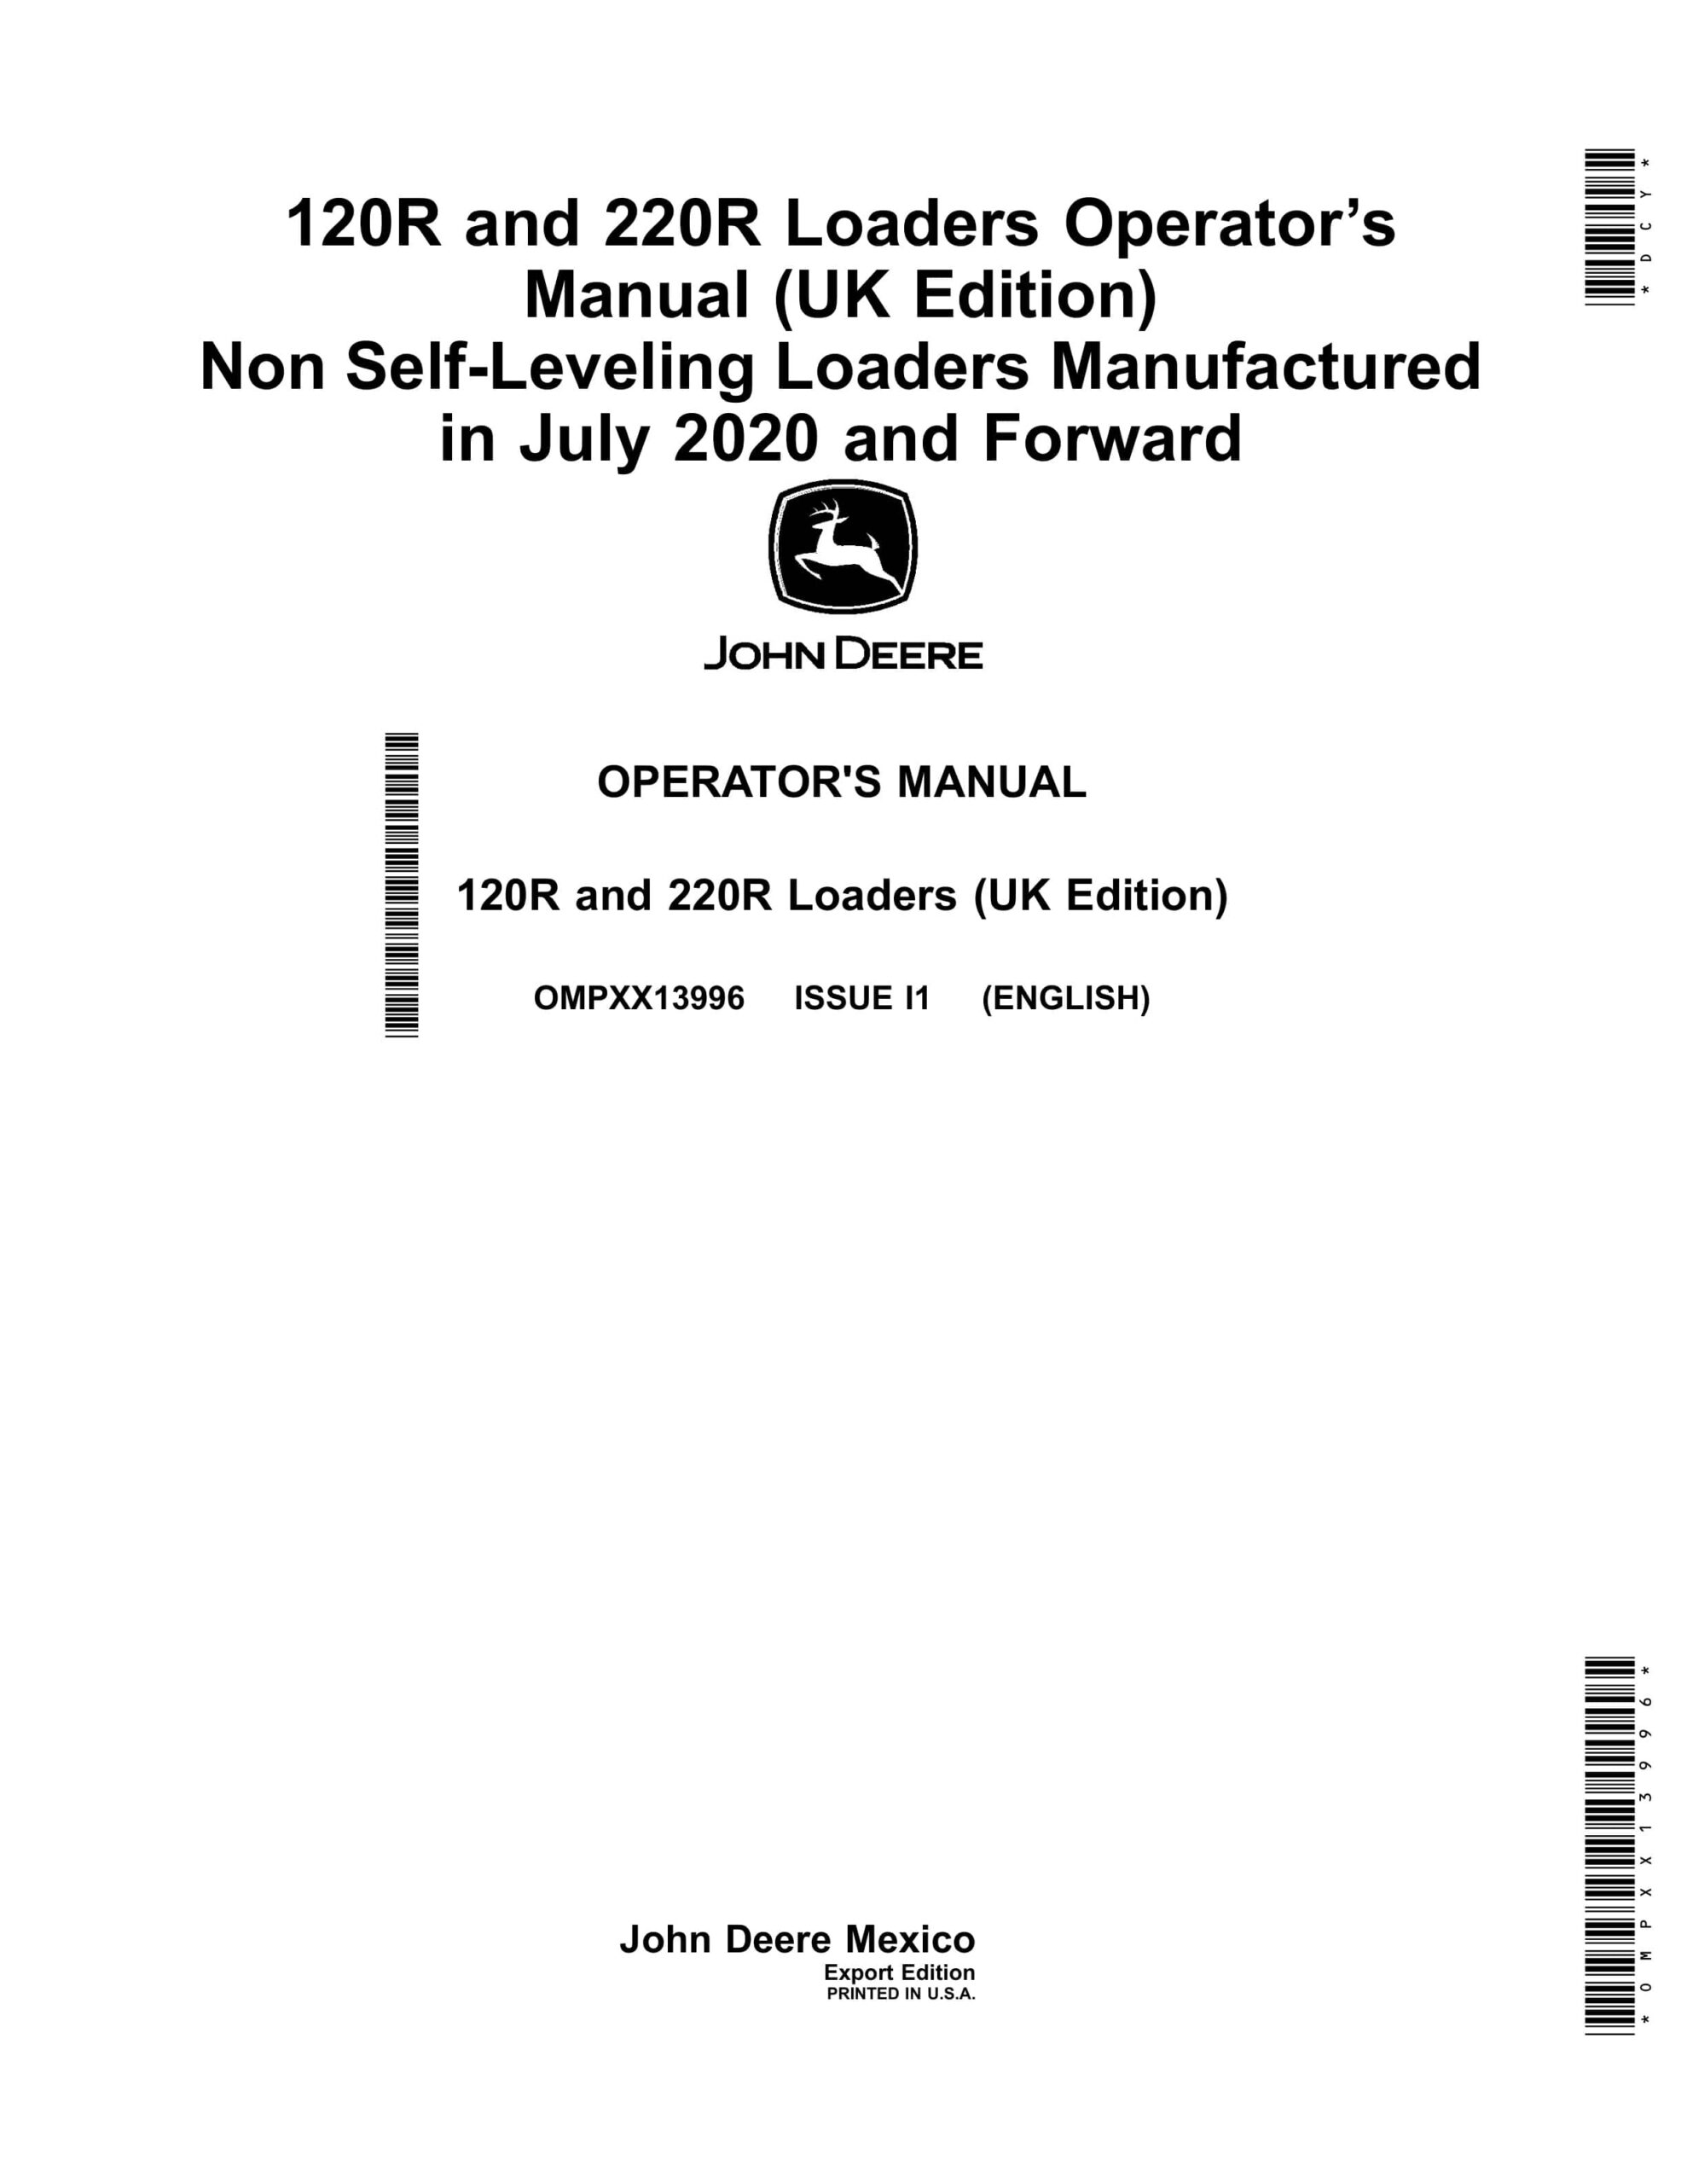 John Deere 120R and 220R Loaders Operator Manual OMPXX13996-1